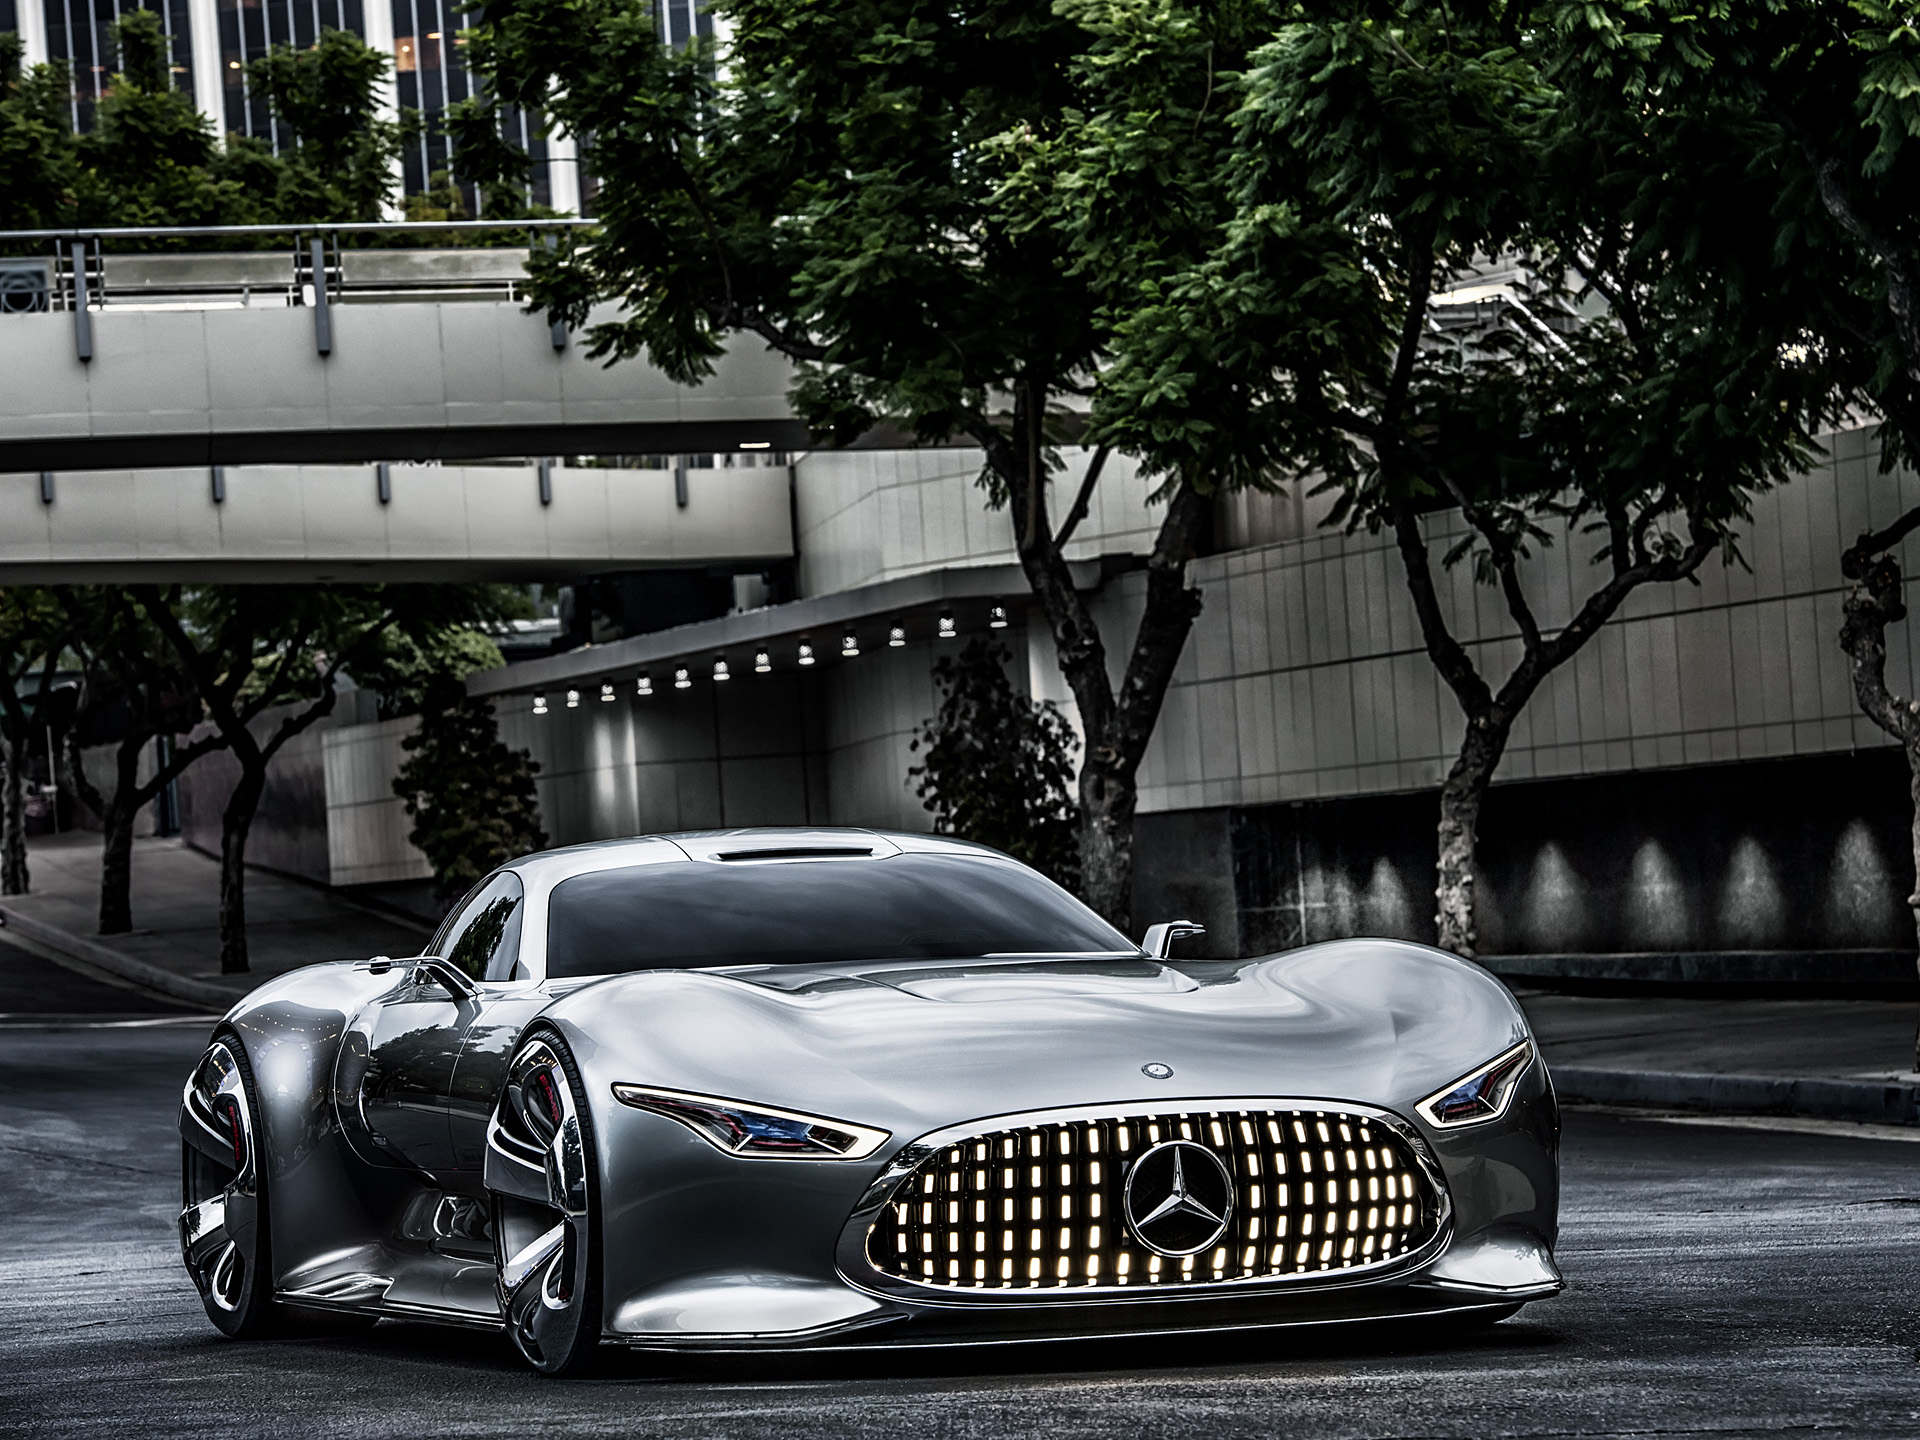  2013 Mercedes-Benz Vision Gran Turismo Concept Wallpaper.